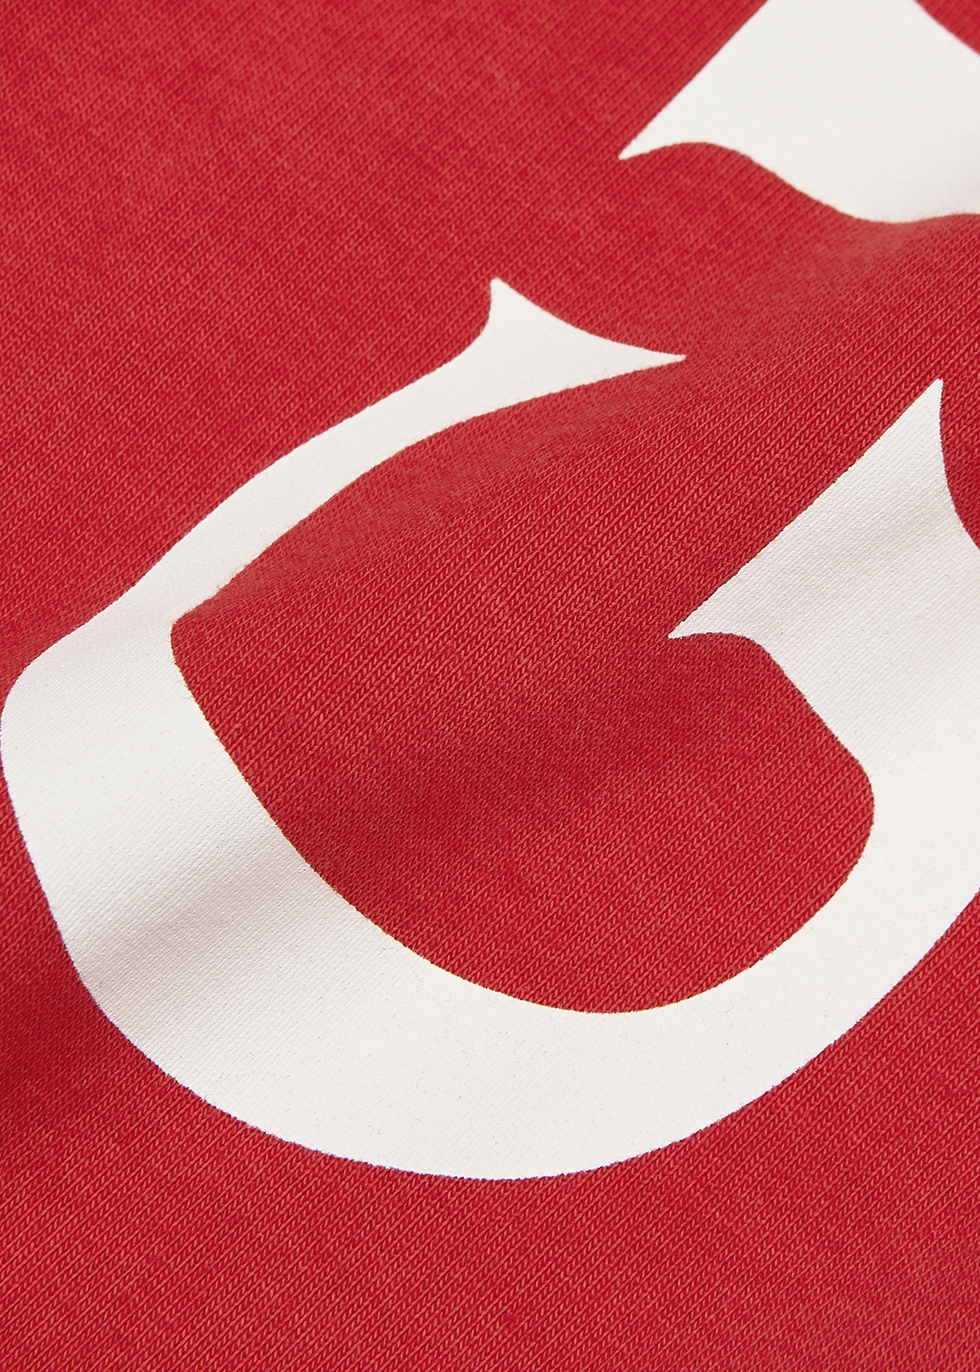 gucci red logo